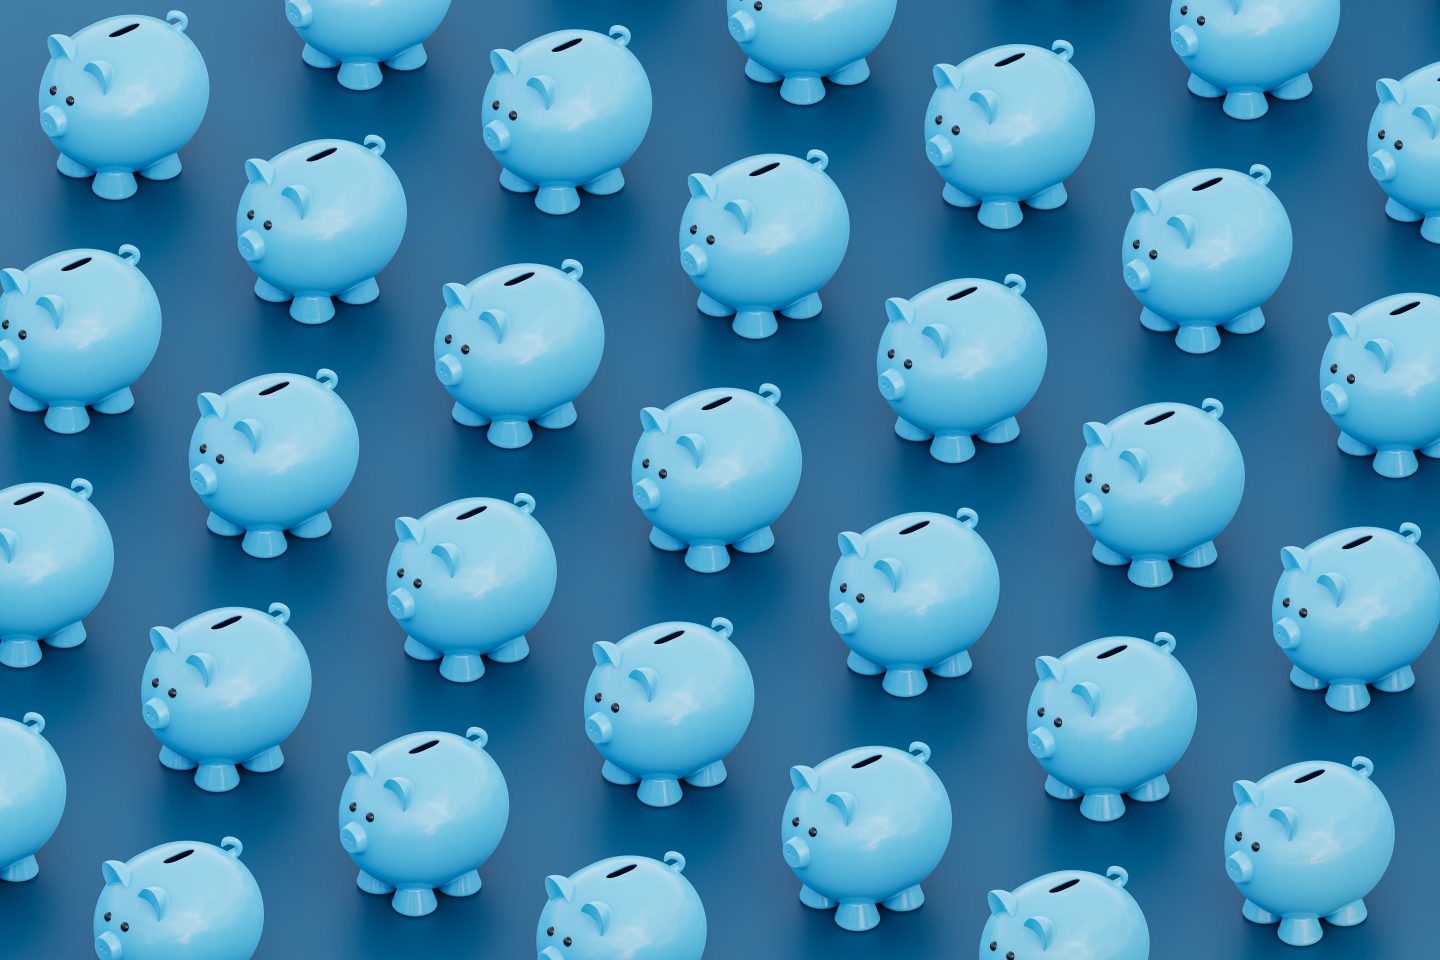 A matrix of small blue piggy banks